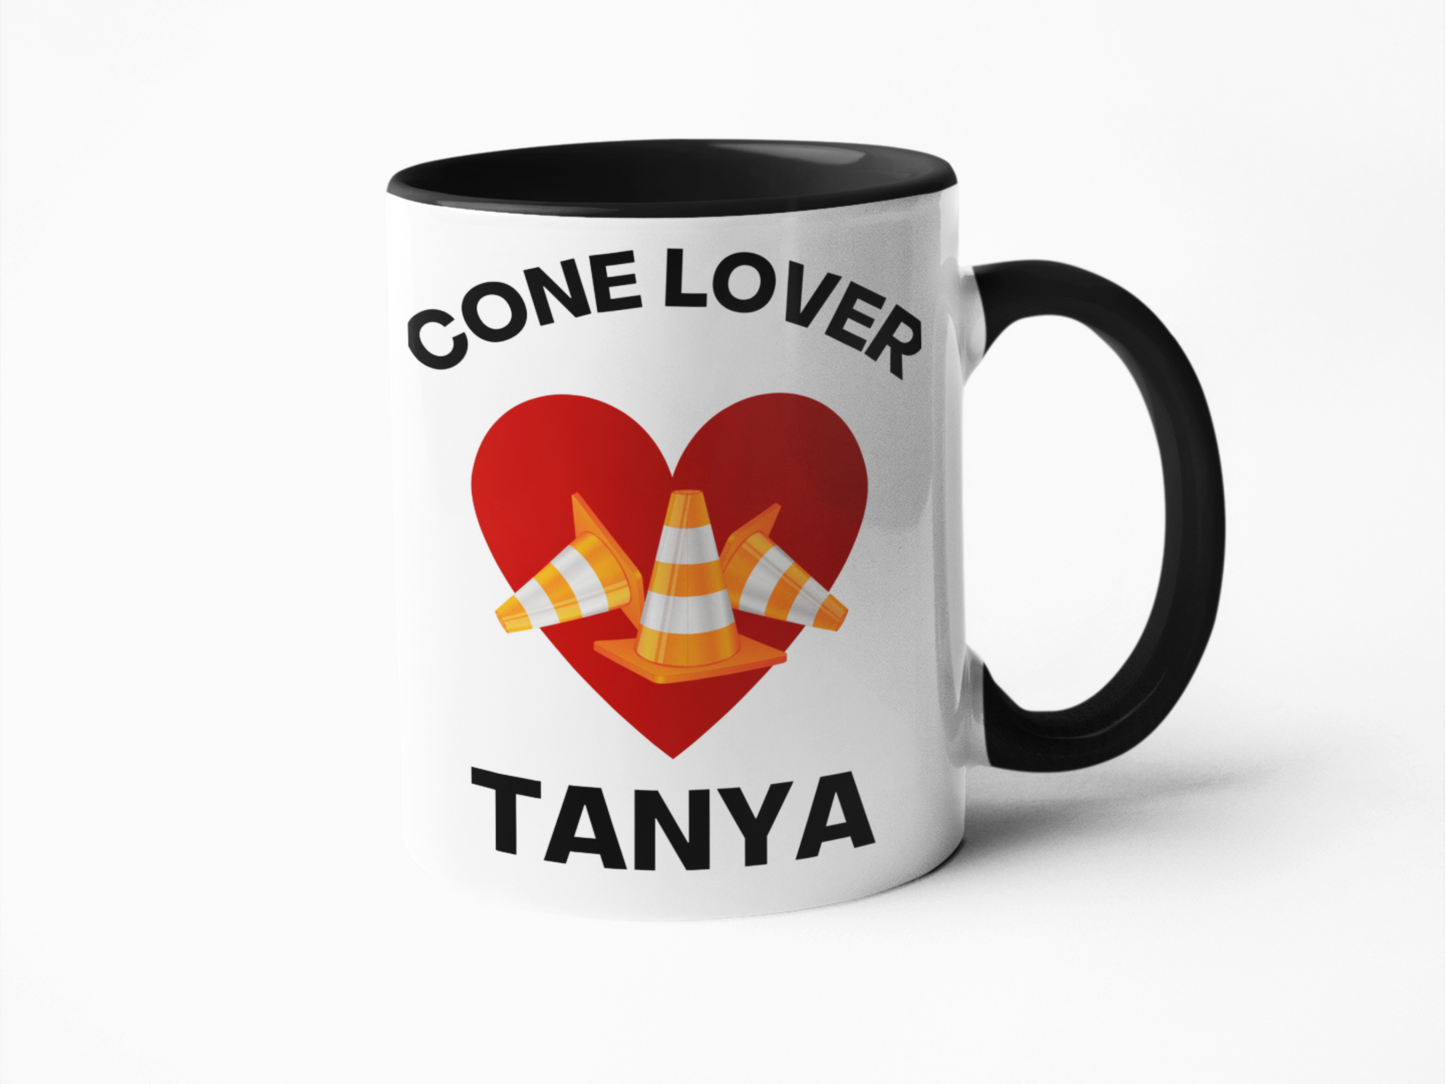 Cone lover funny coffee mug